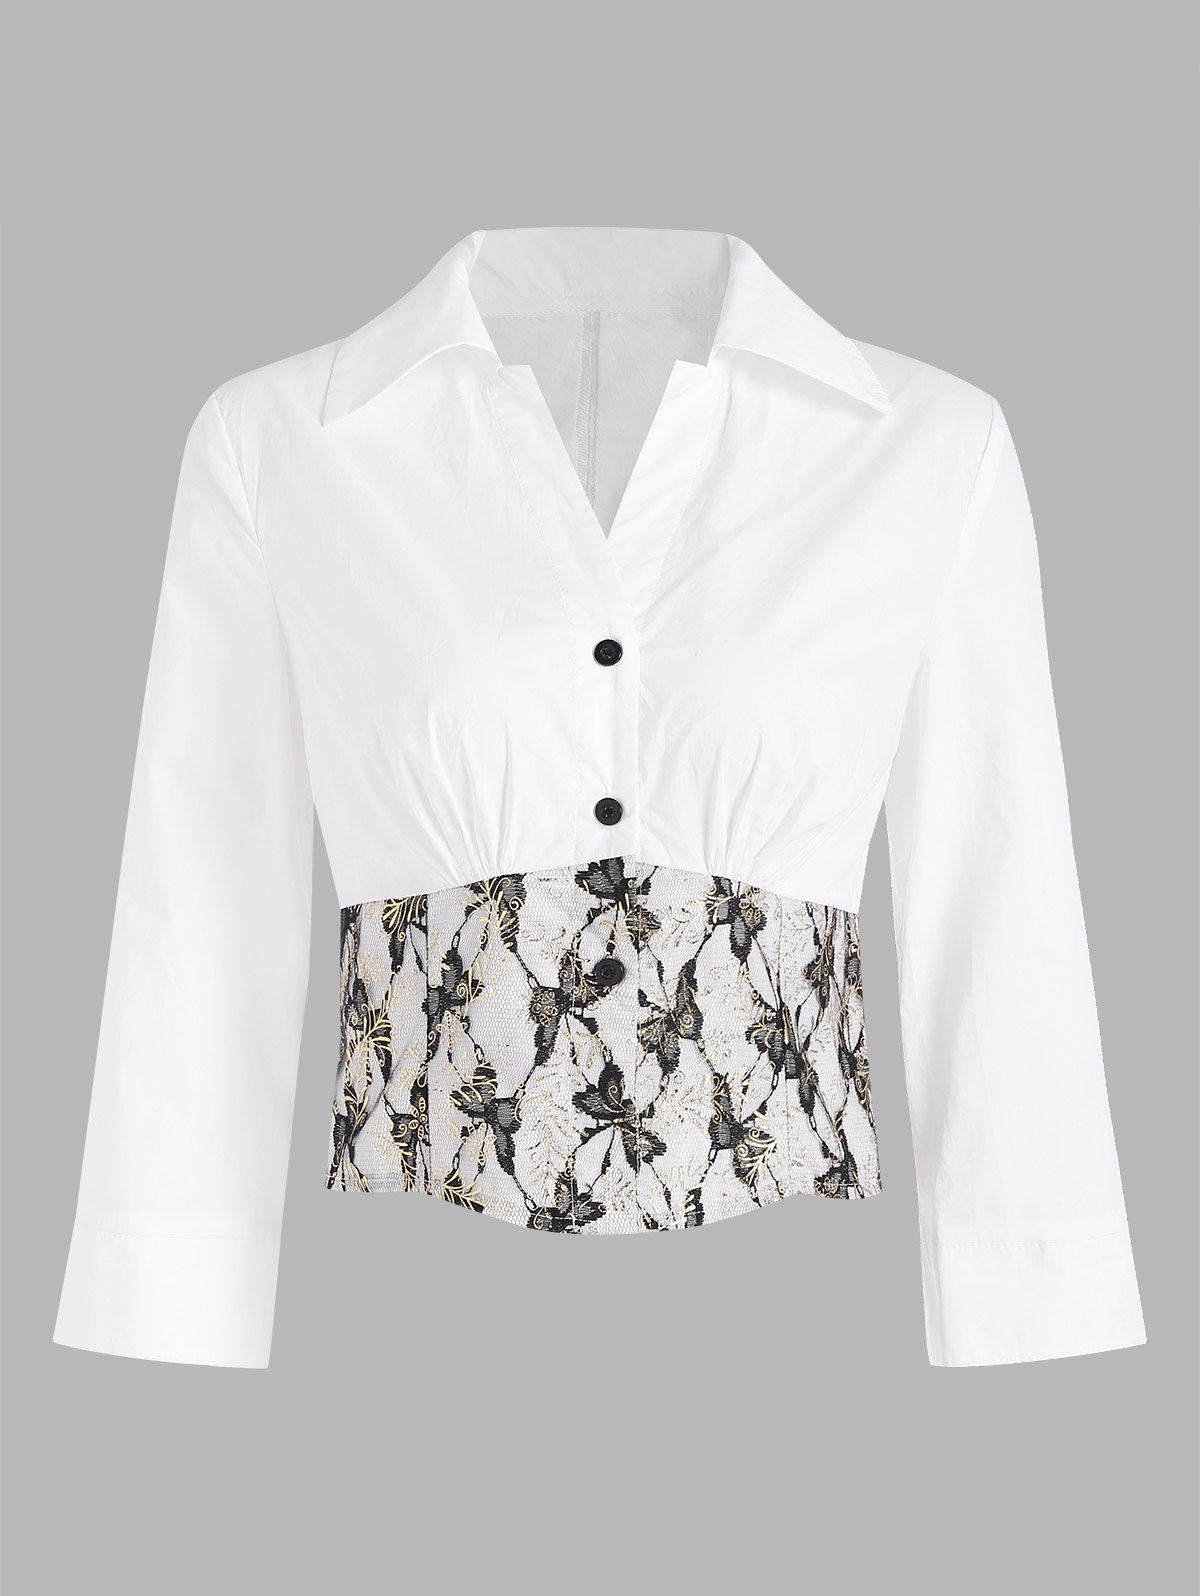 Lace Insert V Notched Corset Style Shirt - WHITE L